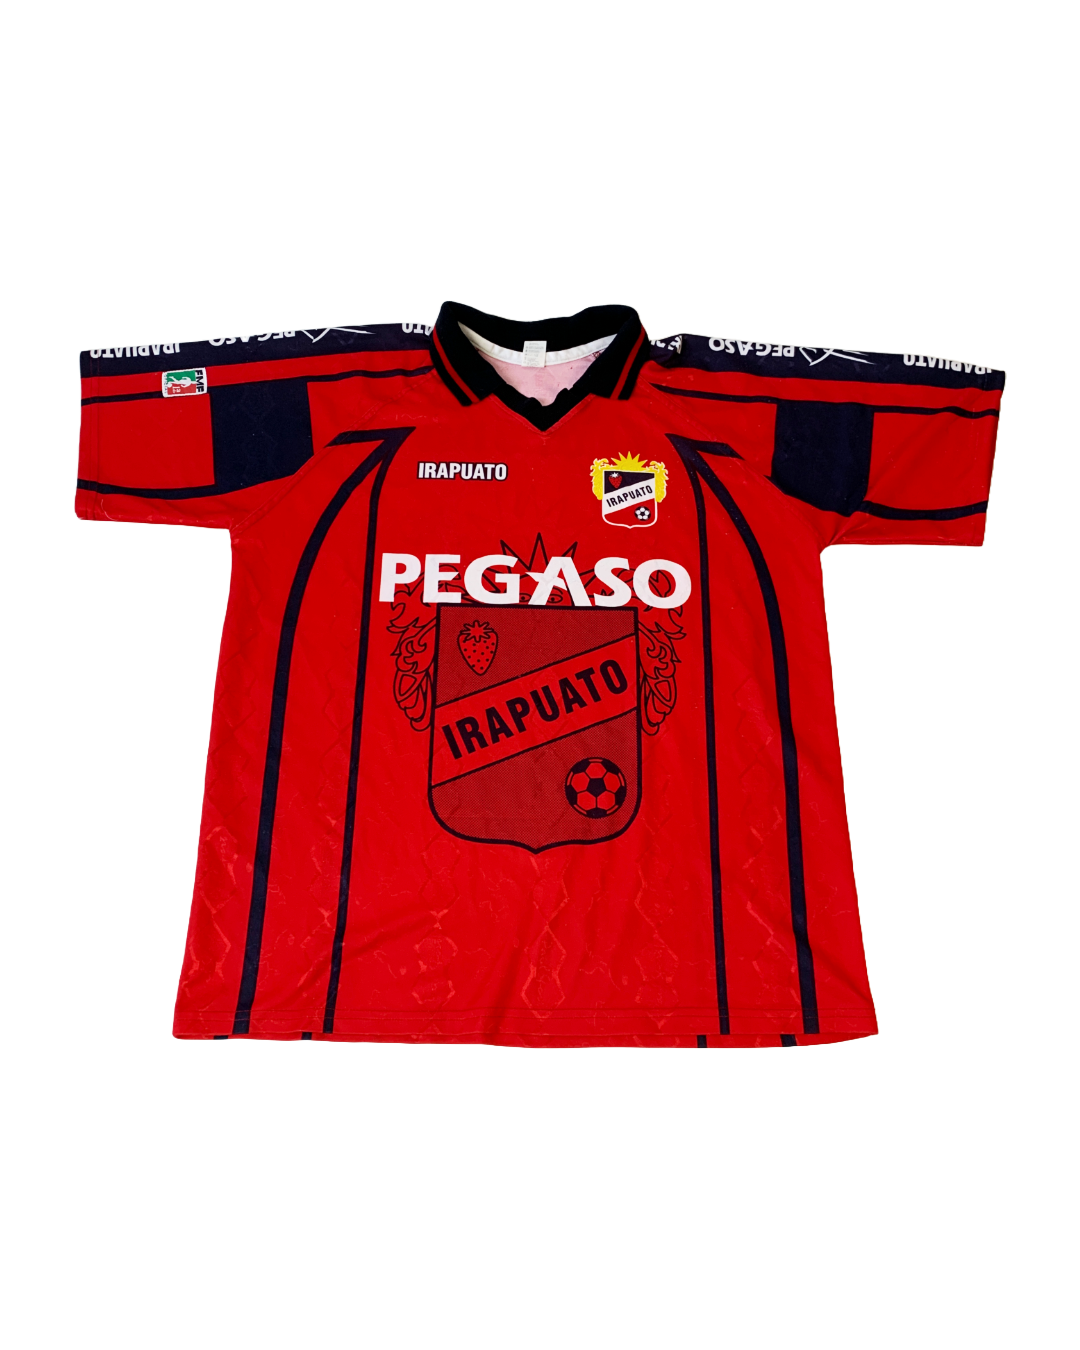 Irapuato 2000 Vintage Jersey - XL